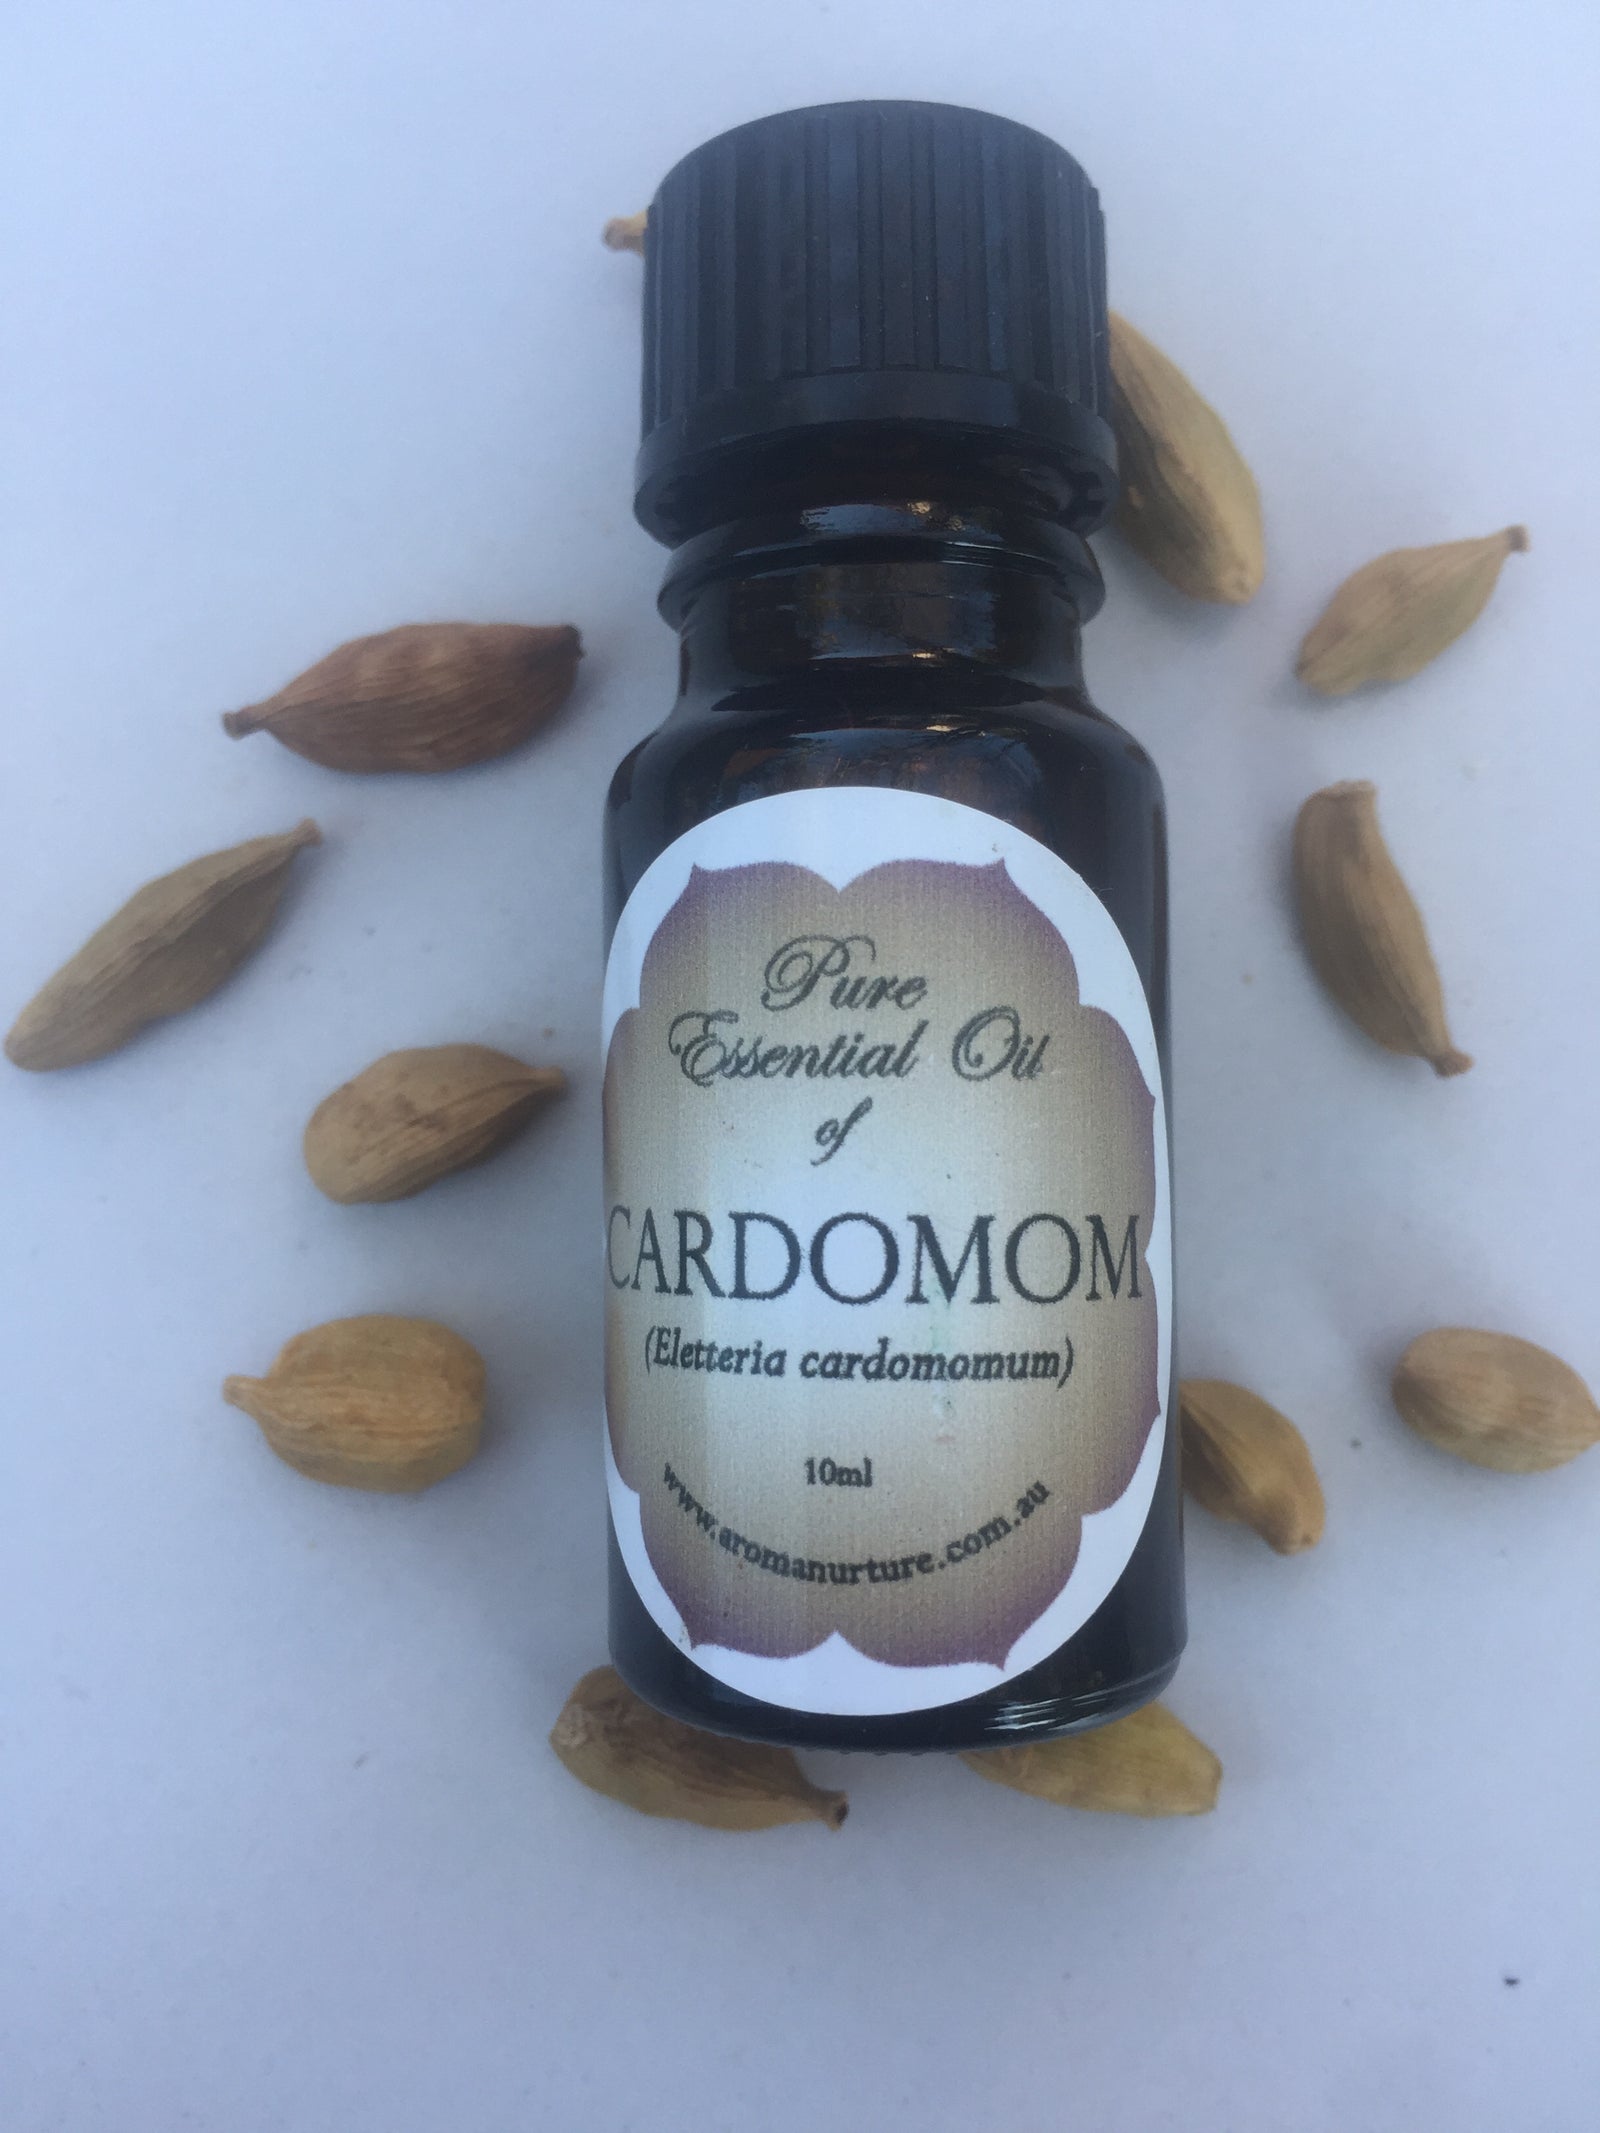 Pure essential oil of Cardamom 10mls.(Elettaria cardamomum)